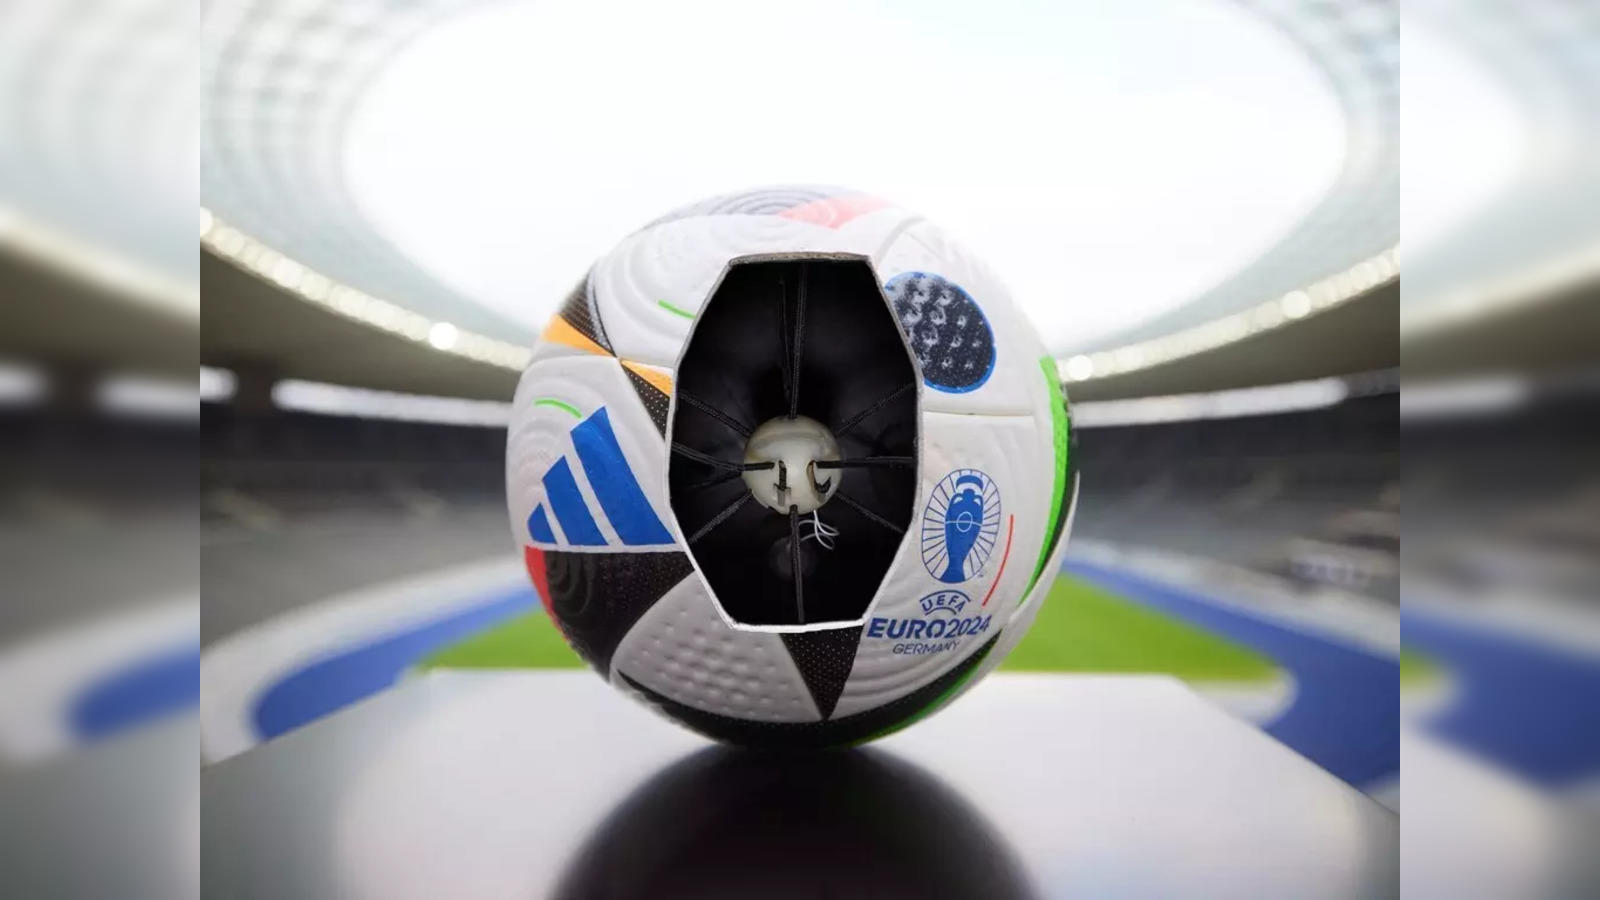 Balón adidas Champions League 2023 2024 Competition t 5